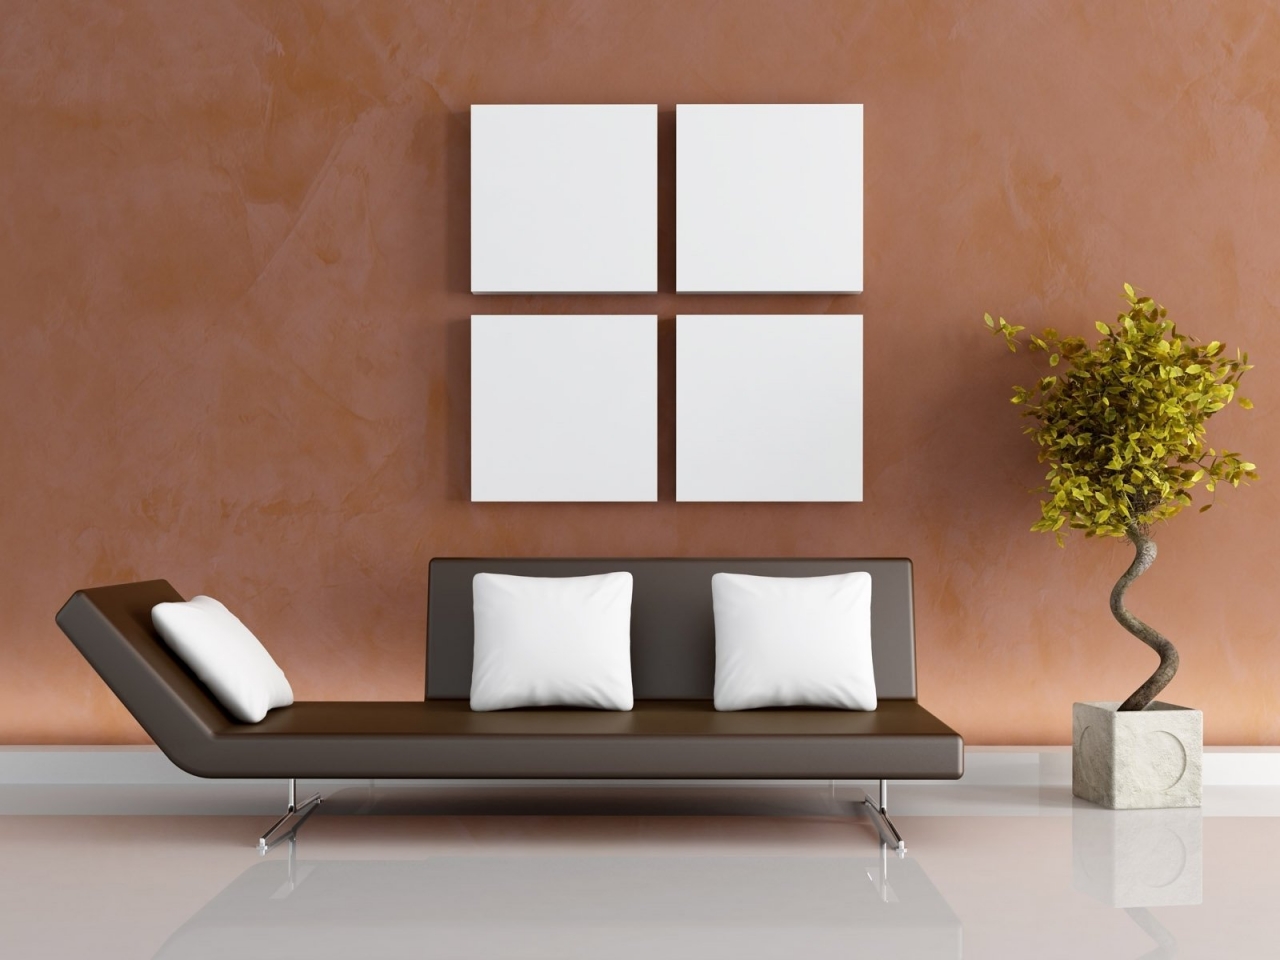 Modern living decor for 1280 x 960 resolution